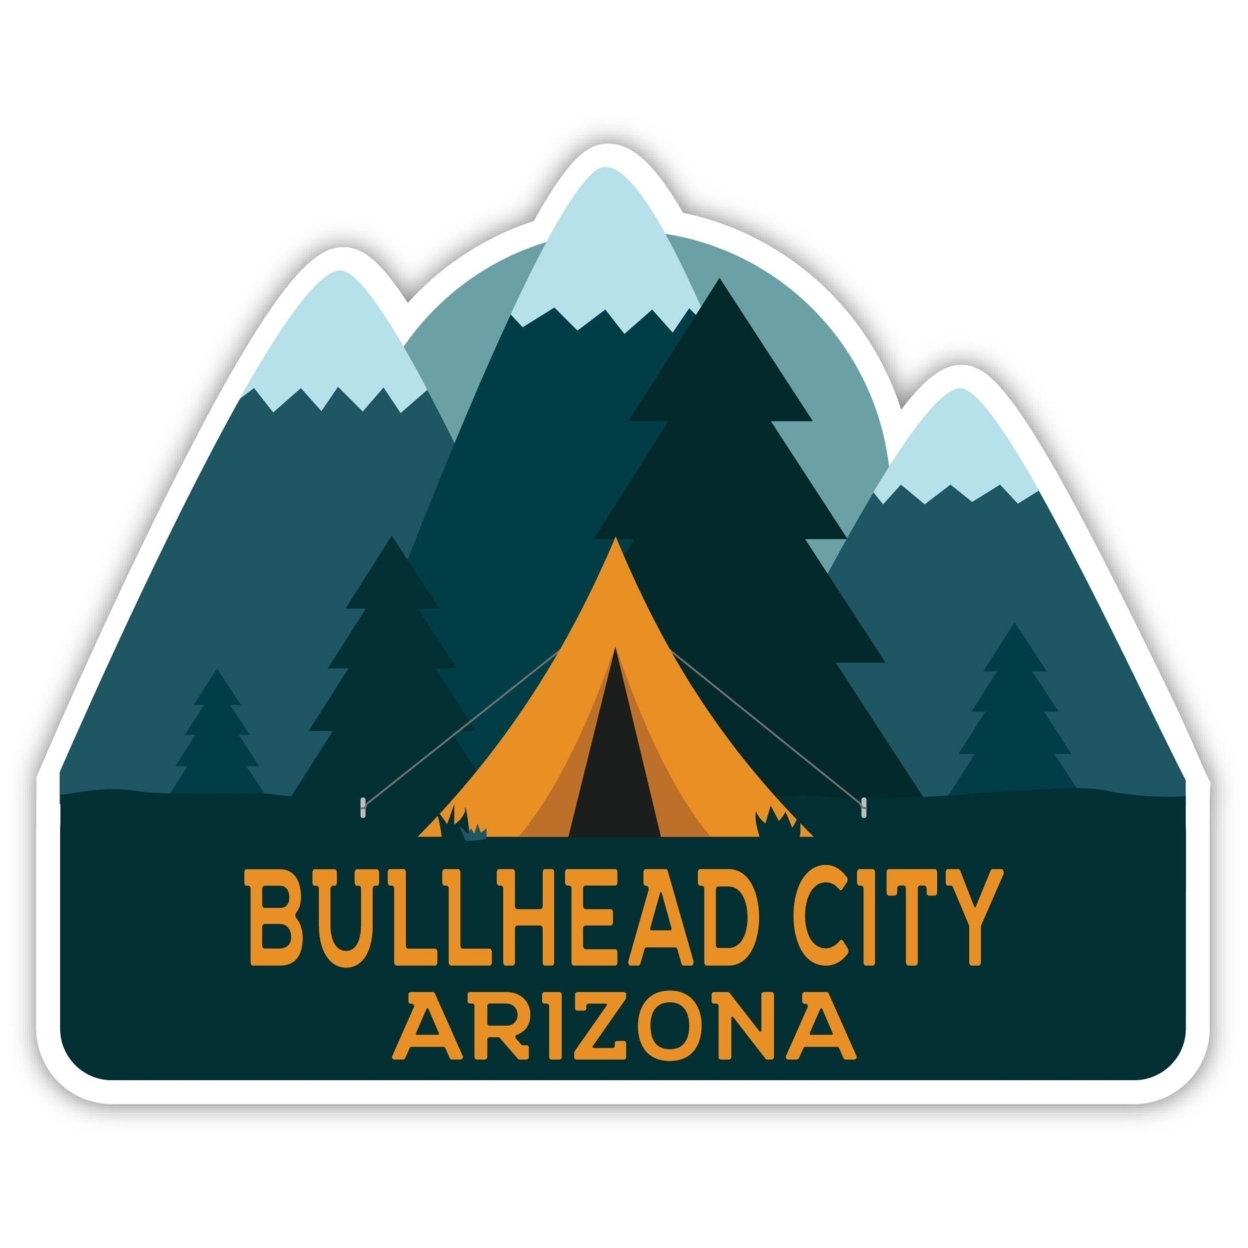 Bullhead City Arizona Souvenir Decorative Stickers (Choose Theme And Size) - 4-Pack, 2-Inch, Adventures Awaits